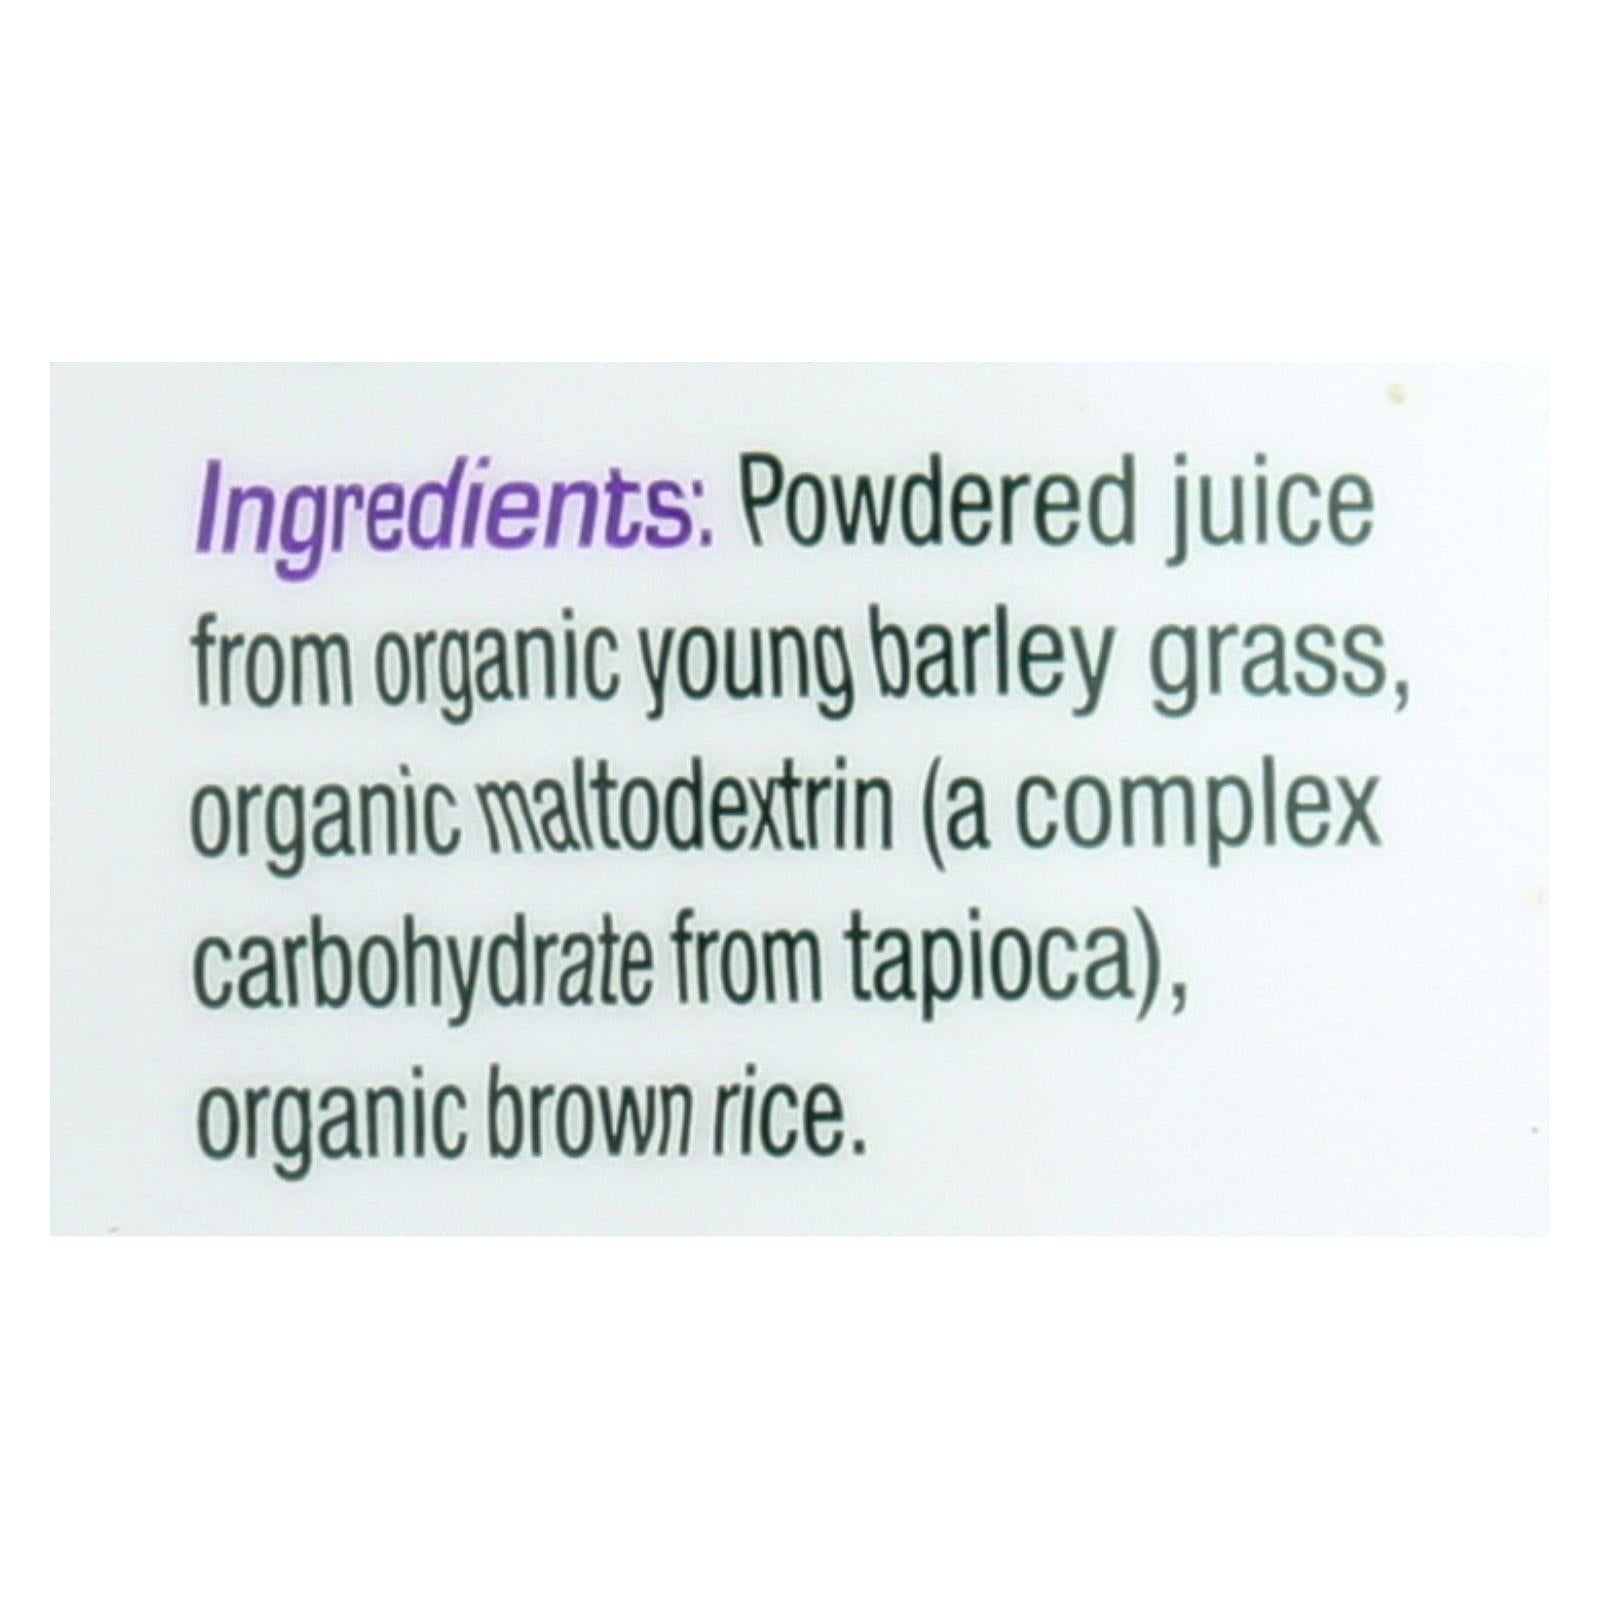 Green Foods Dr Hagiwara Green Magma Barley Grass Juice Powder - 10.6 Oz